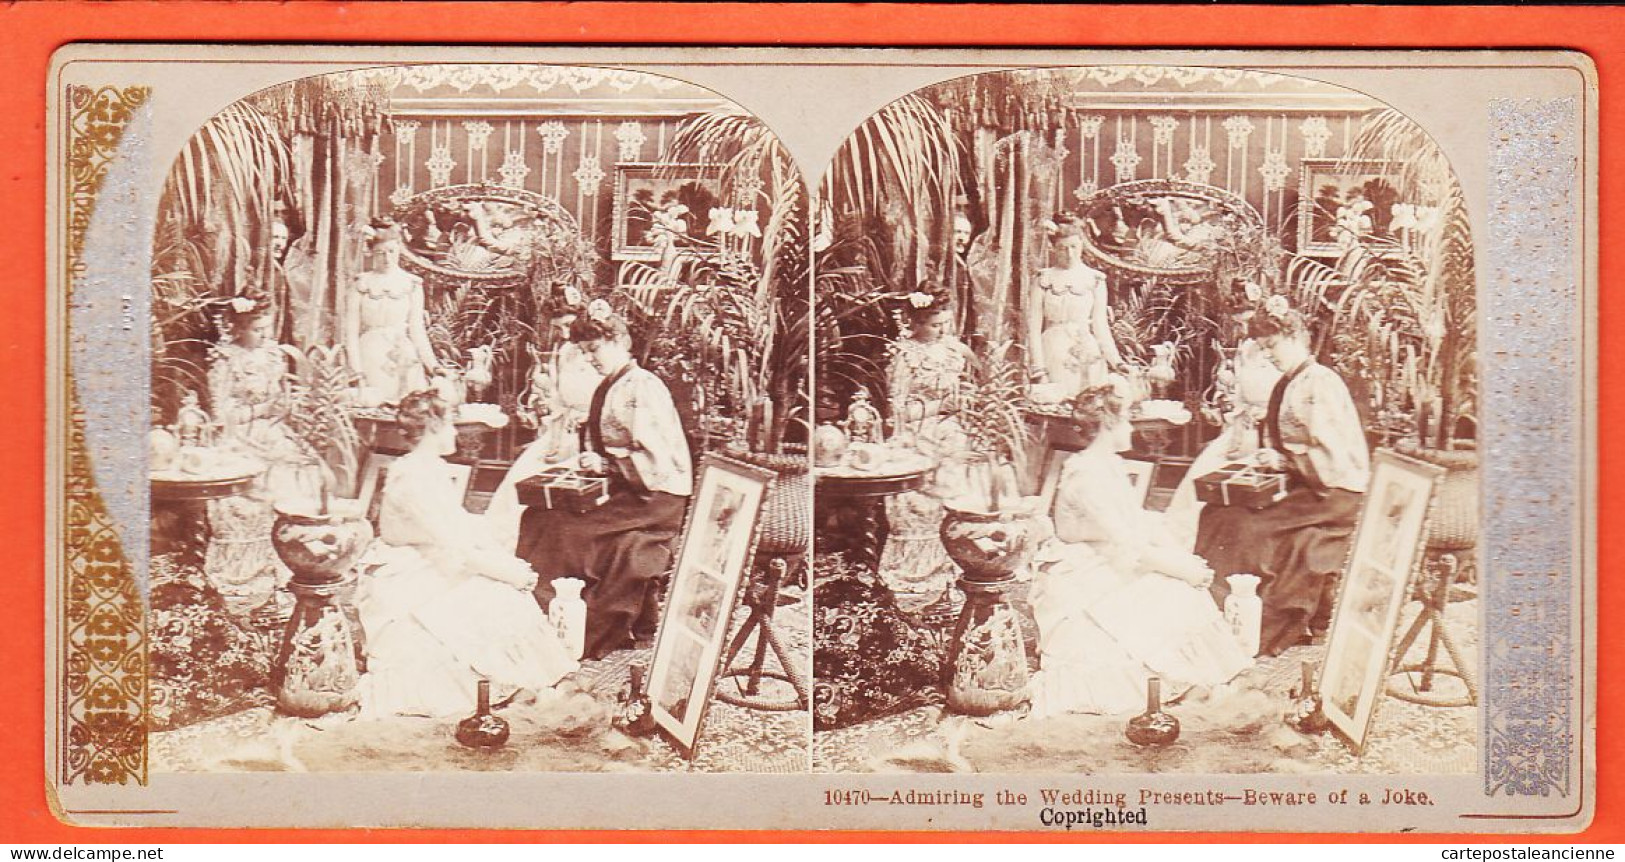 04569 / Admiring The Wedding Presents Beware Of A Joke 1- Mefiez Vous Cadeaux Mariage Blague 1890s Stereo-Views  N°10470 - Photos Stéréoscopiques